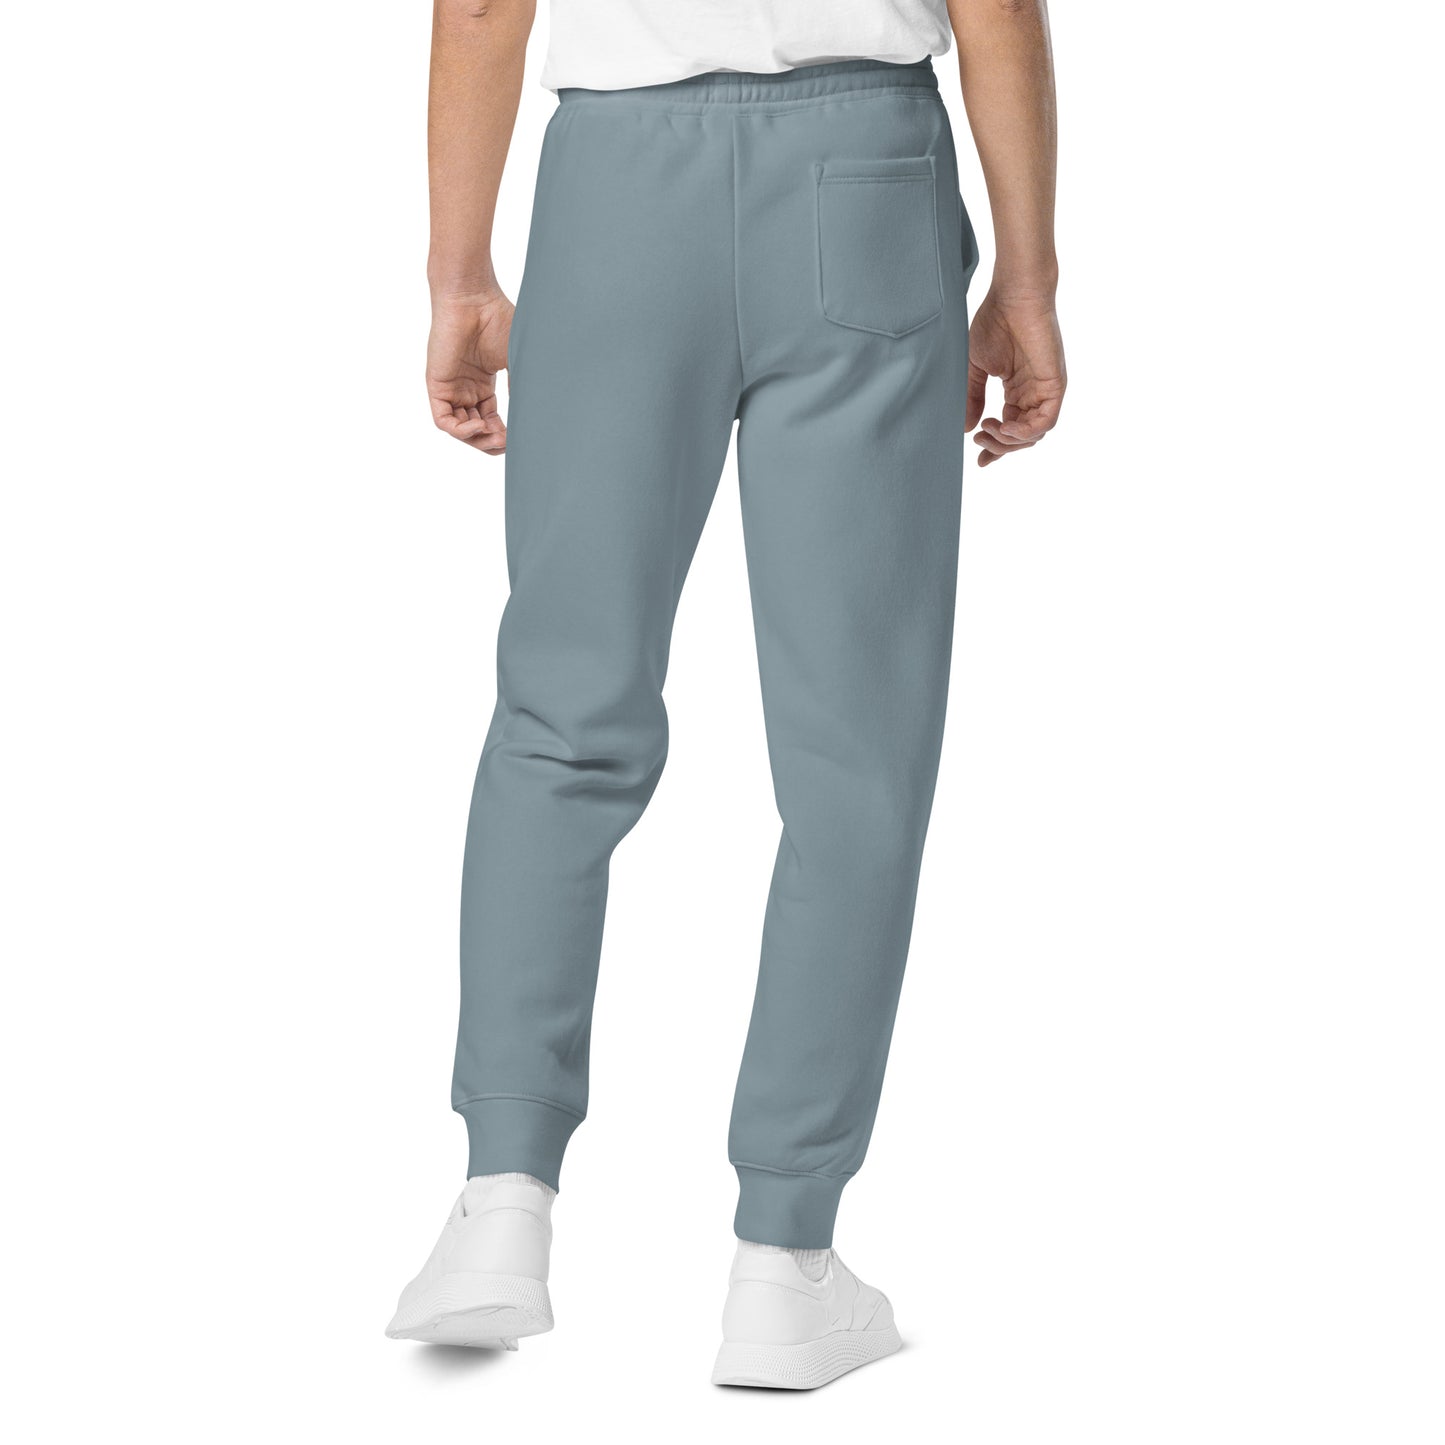 Unisex Washed Jogger Sweatpants - Multiple Color Options